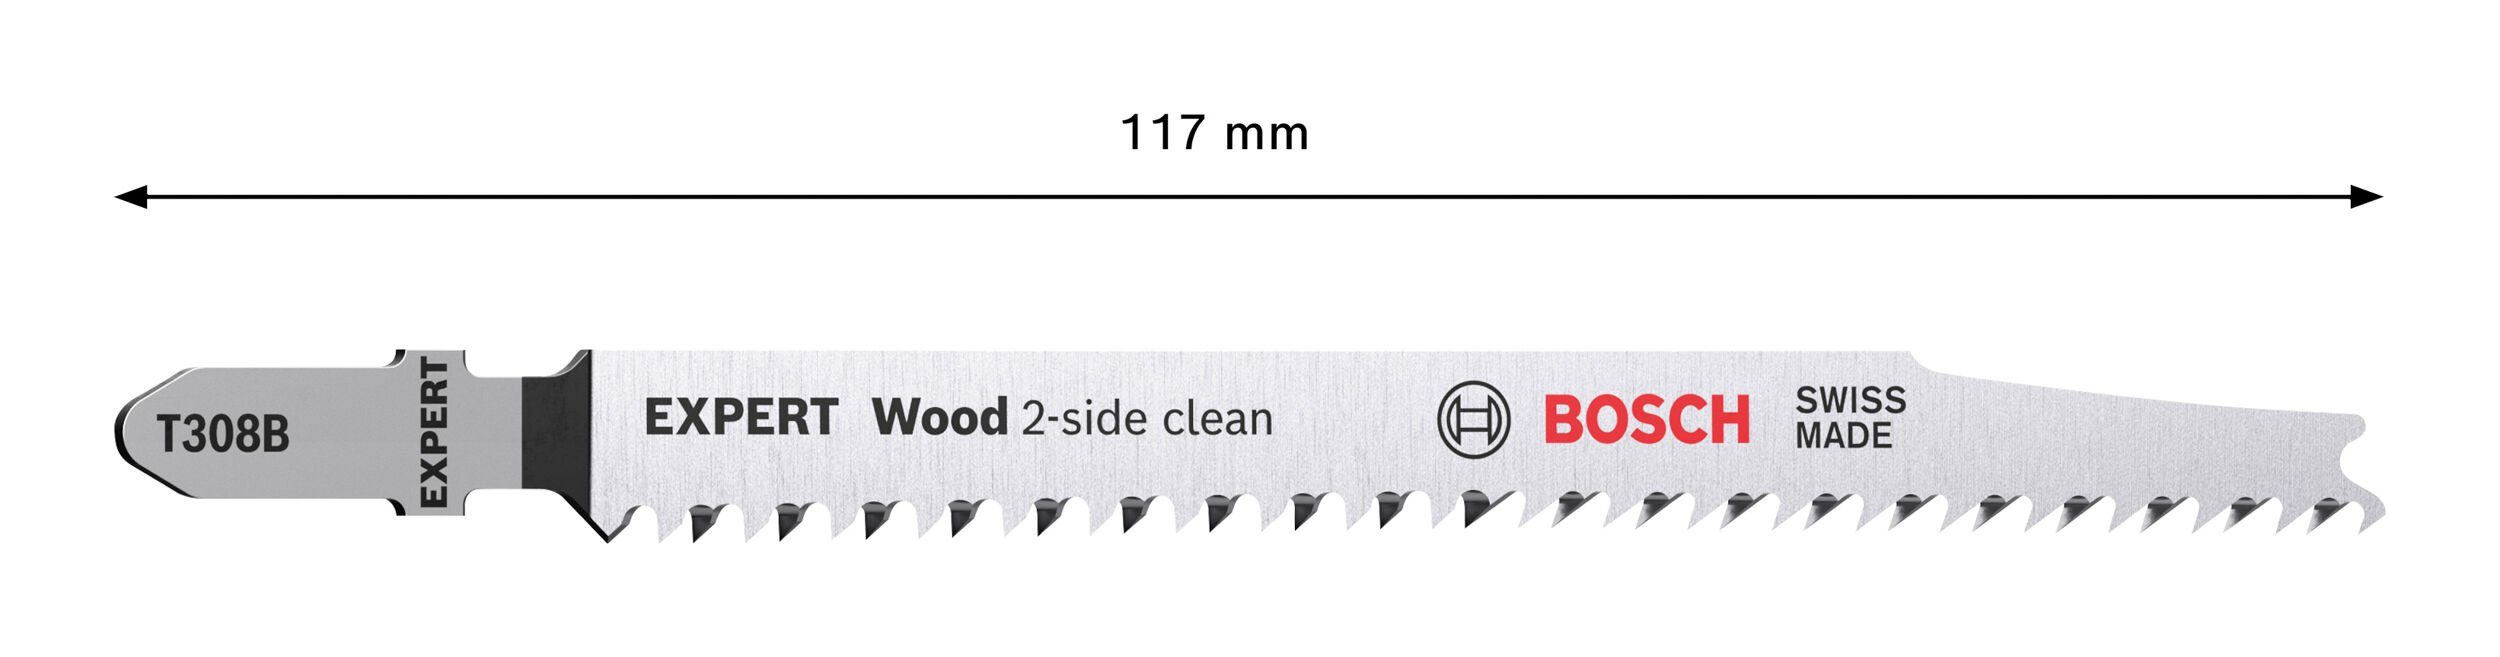 BOSCH Stichsägeblatt Stichsägen Expert 2-side, Wood B, 25 für "Wood Stück T 2-side Expert 308 clean"